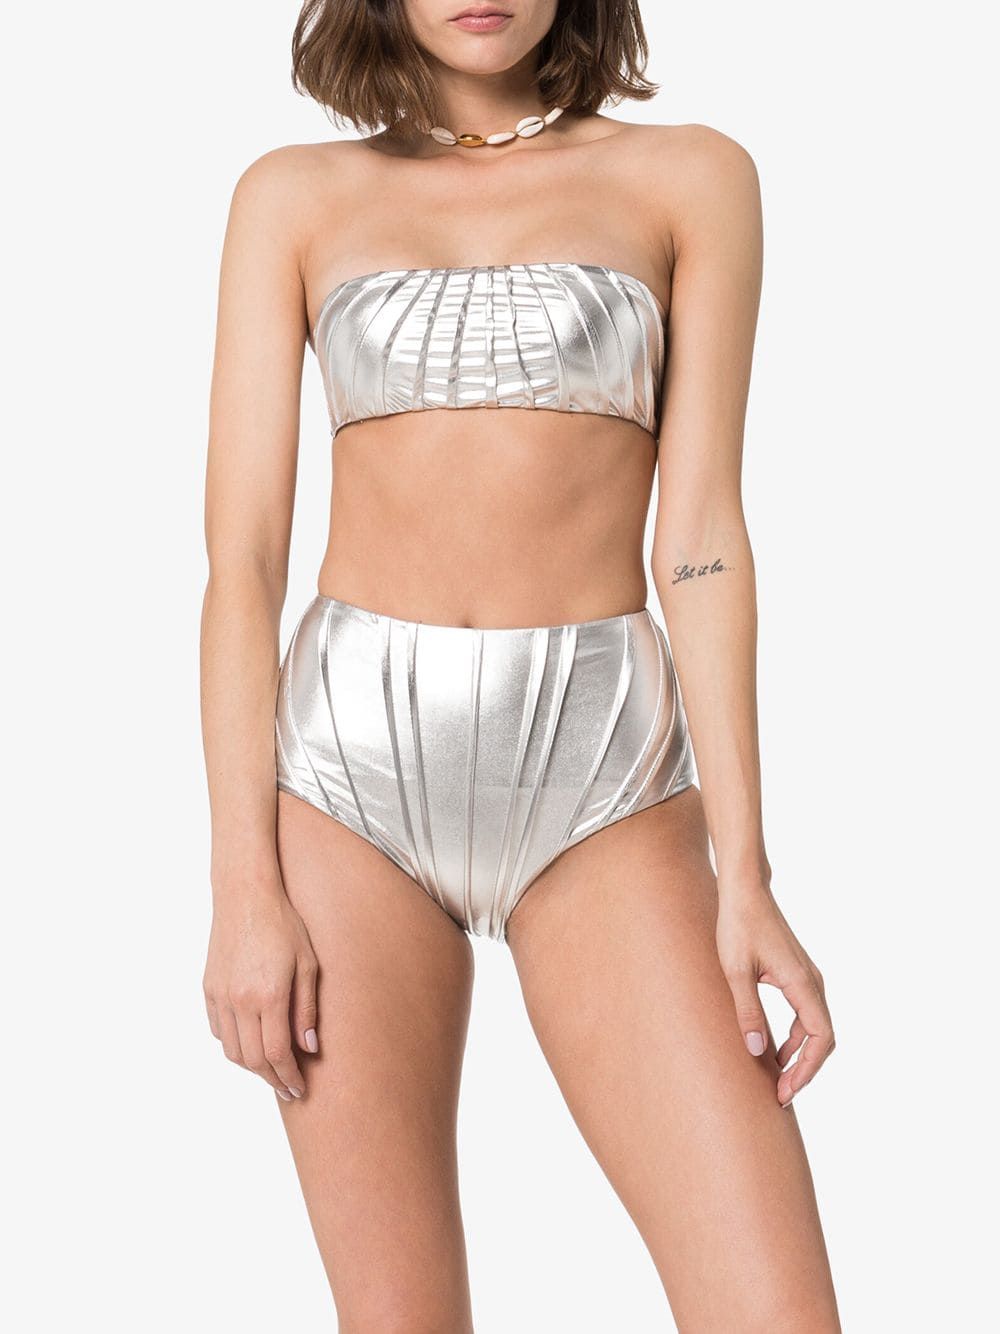 Ladies Ex TopShop High Waisted Strapless Swimwear Bandeau Bikini White Mesh